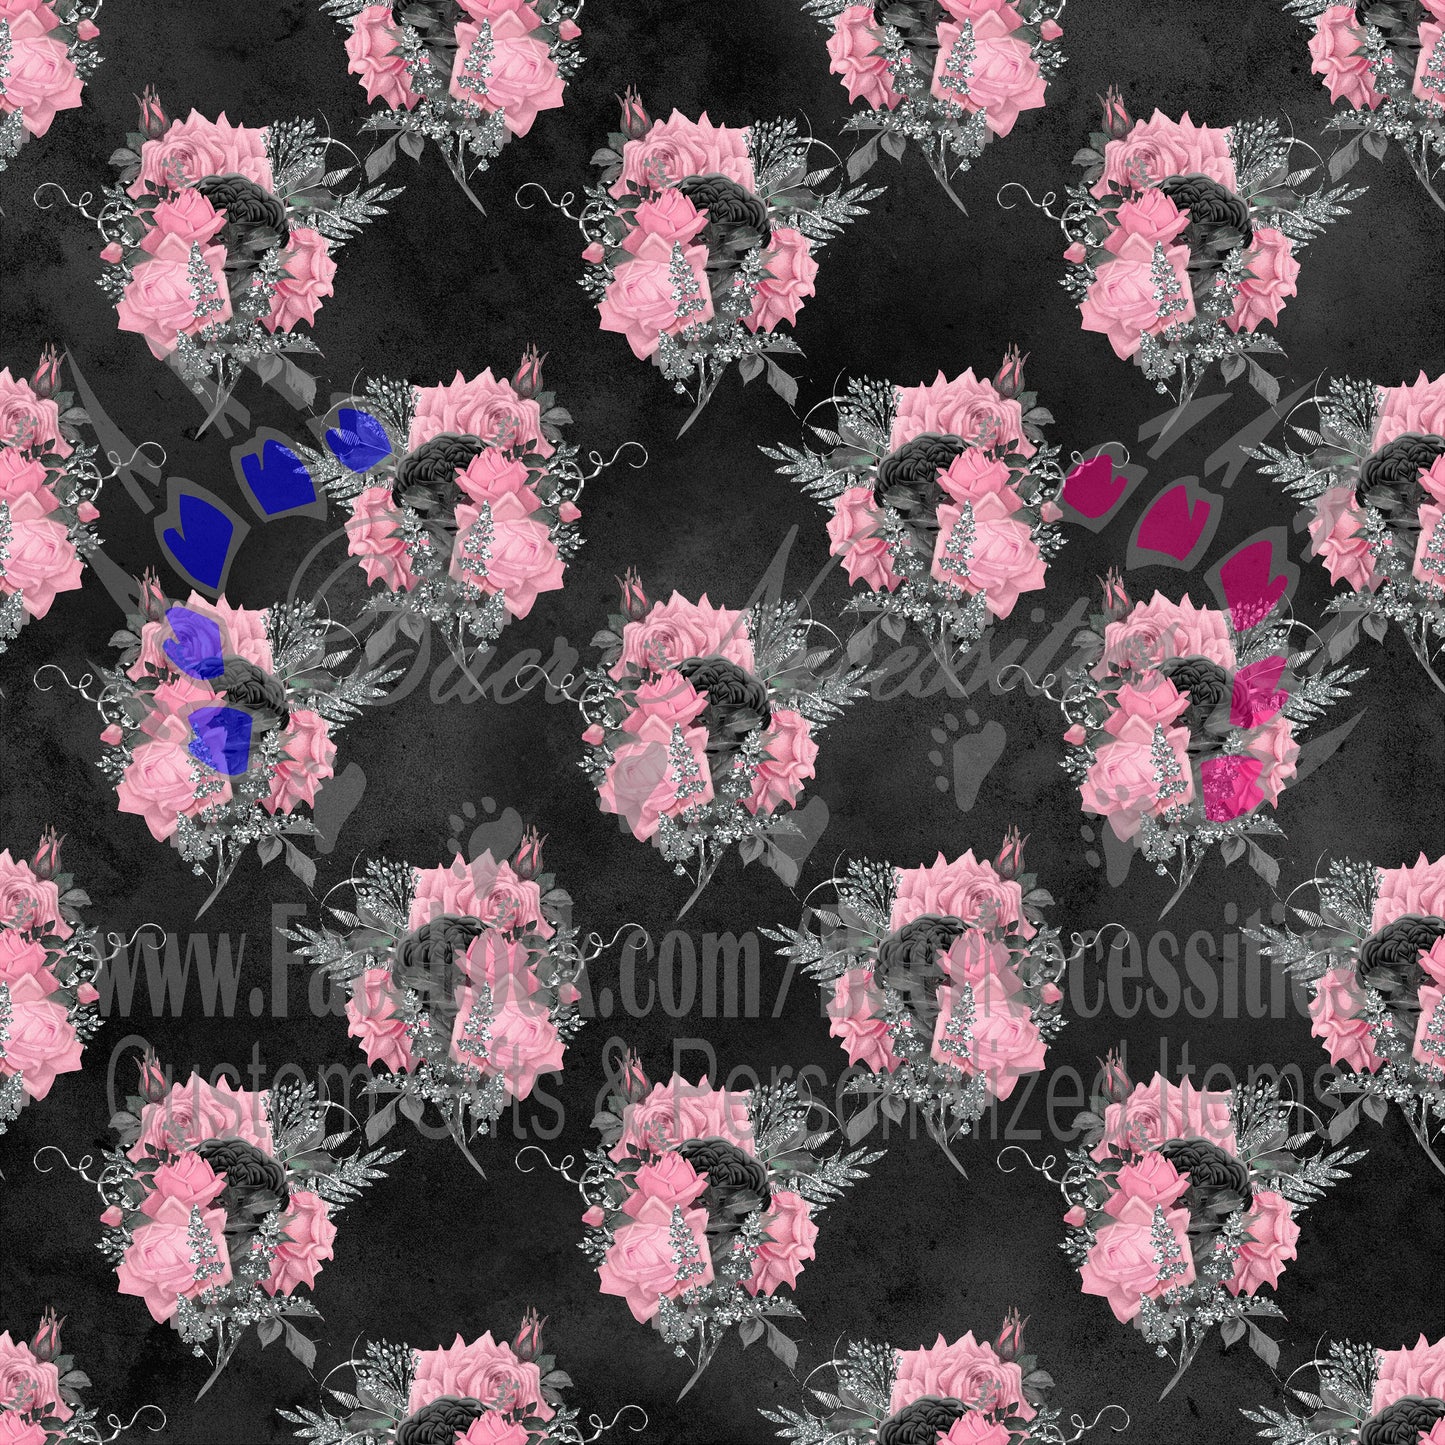 Pink Black Floral 02 - Adhesive